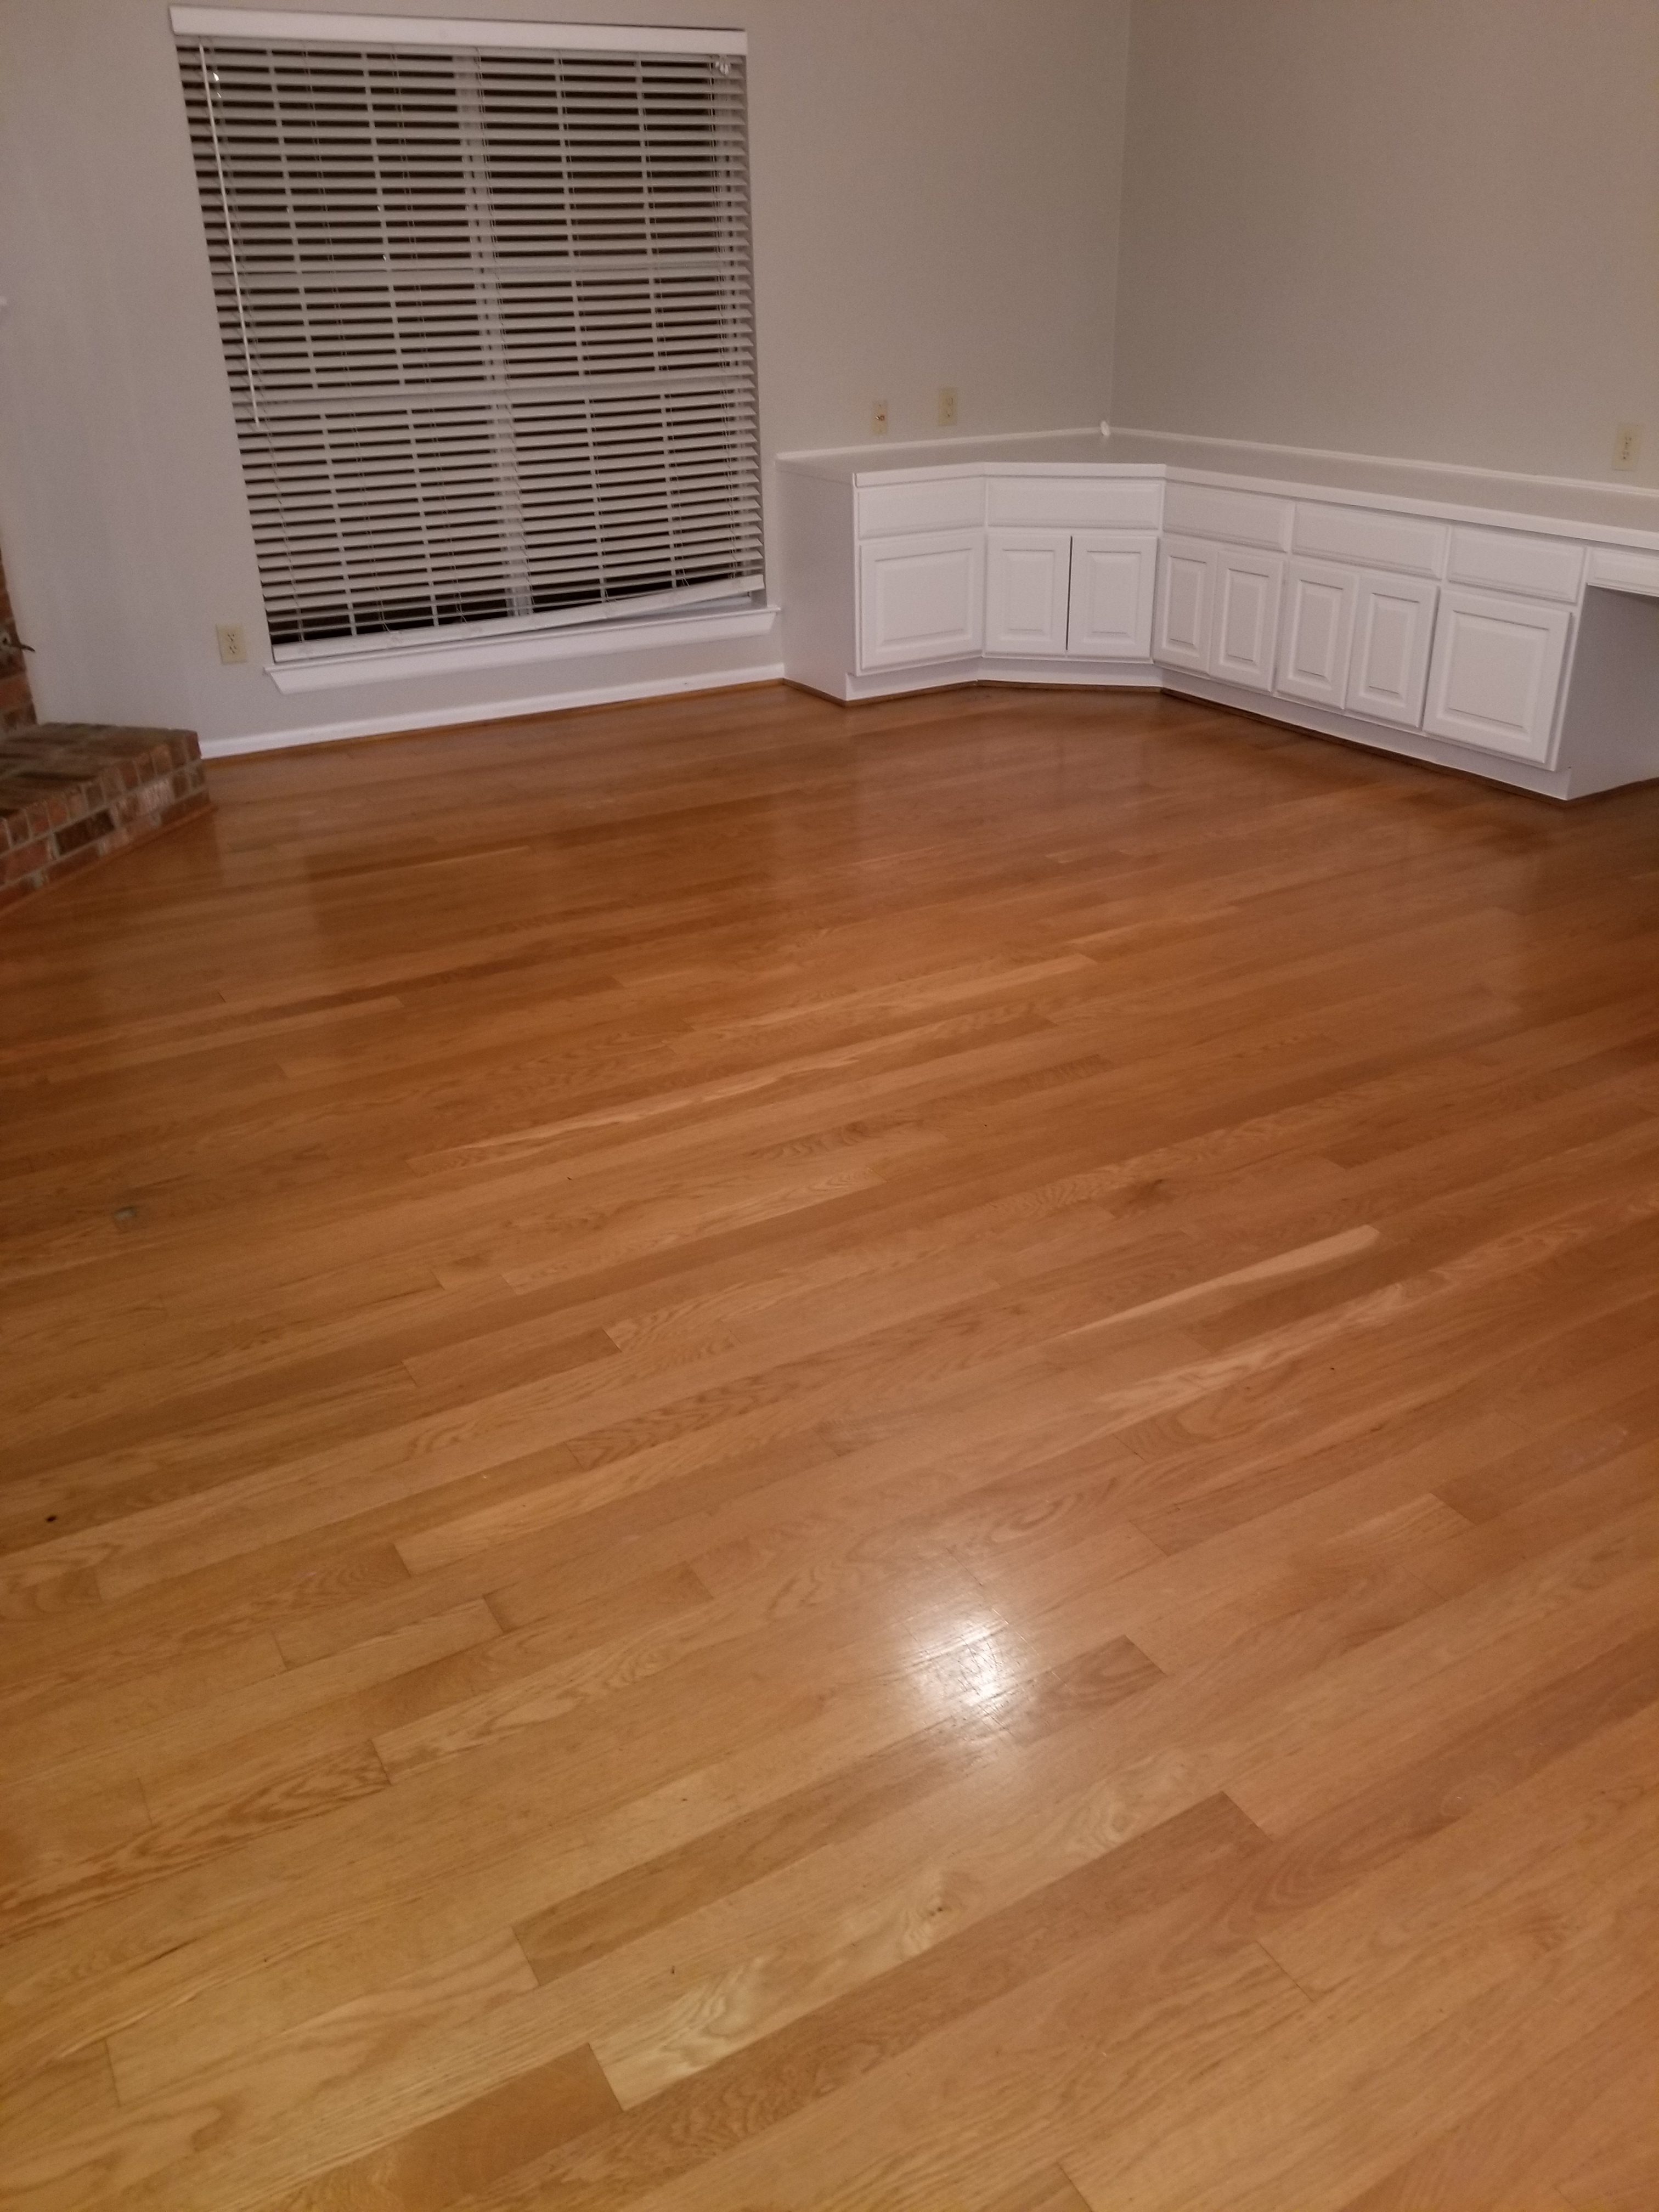 Wood floor cleaning in Dallas, TX